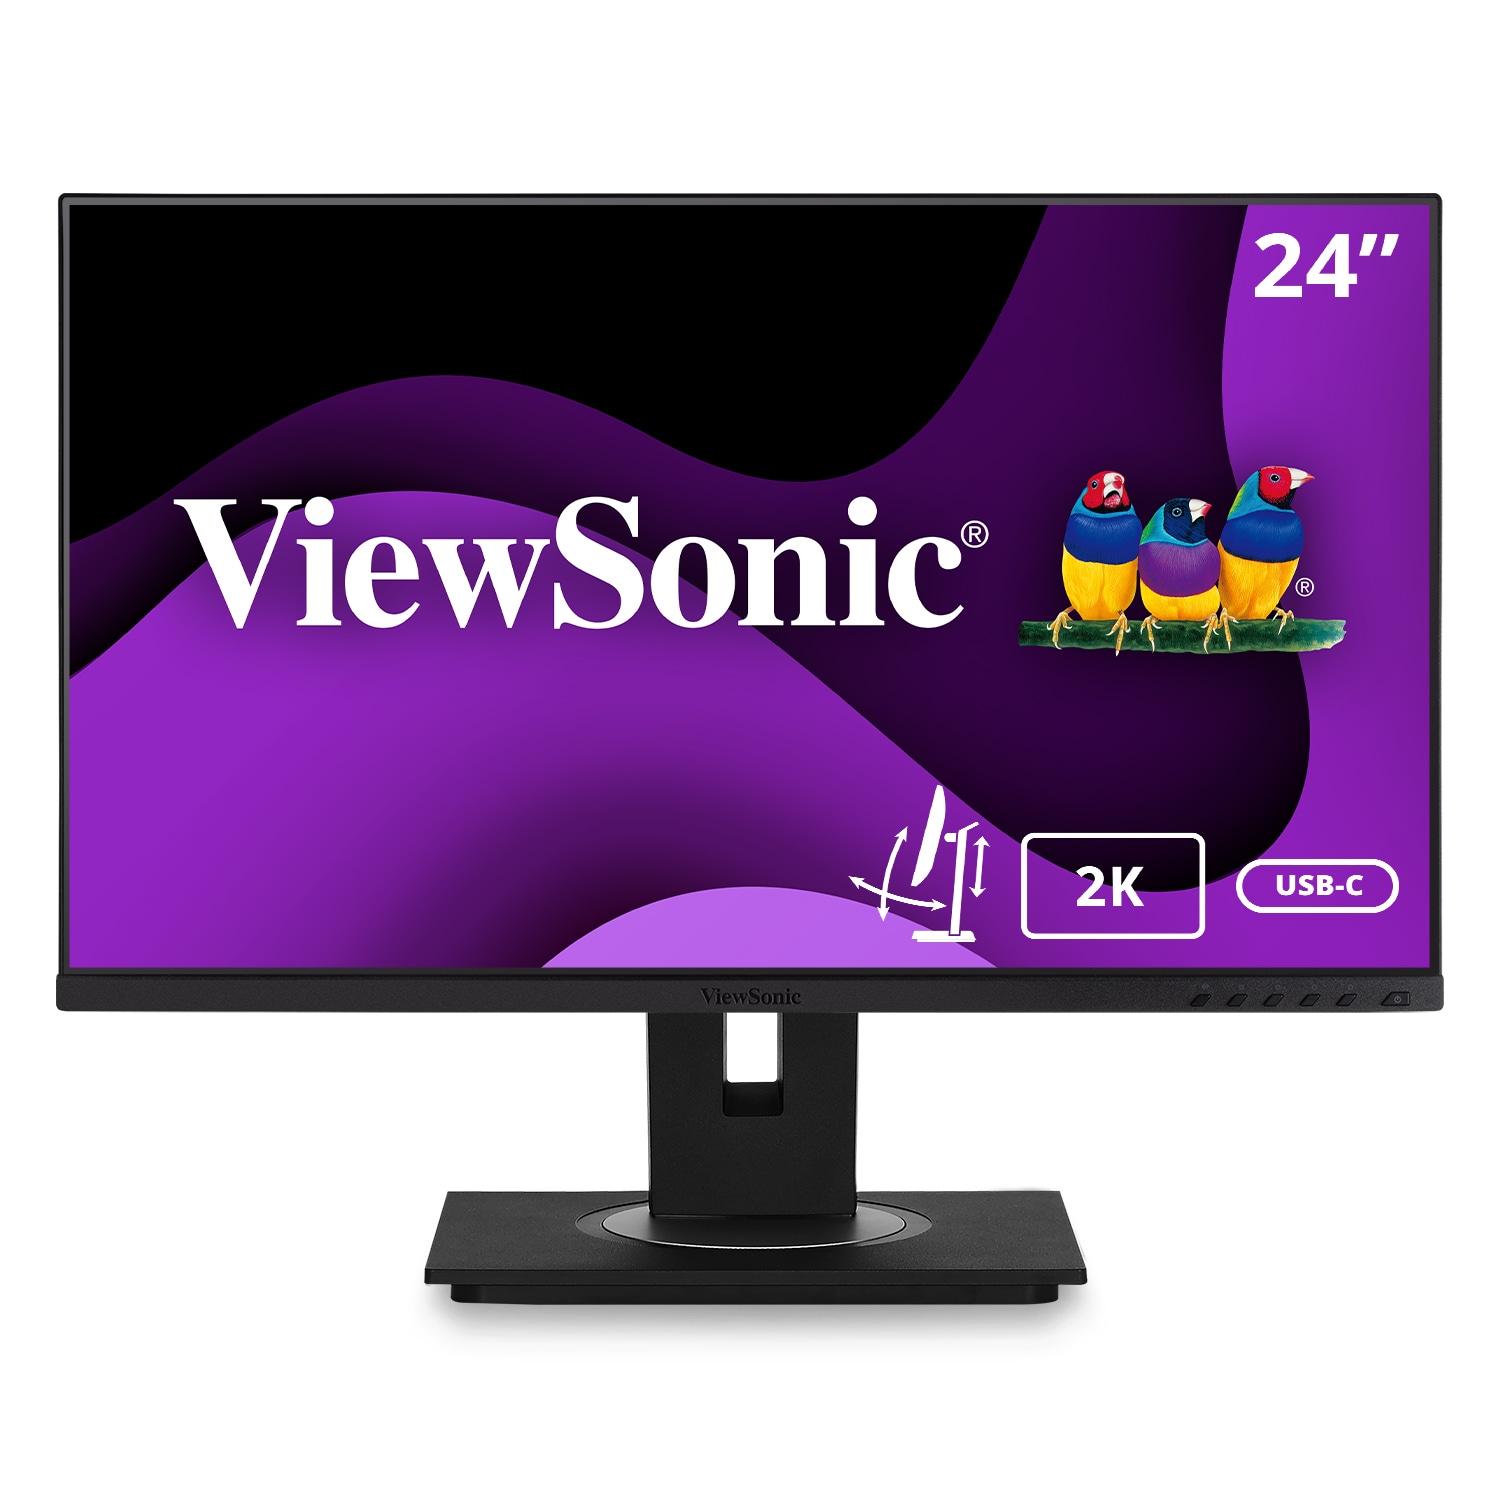 ViewSonic Ergonomic VG2455-2K - 1440p IPS Monitor with USB-C, HDMI, DisplayPort and 40 Degree Tilt - 300 cd/m²  - 24"